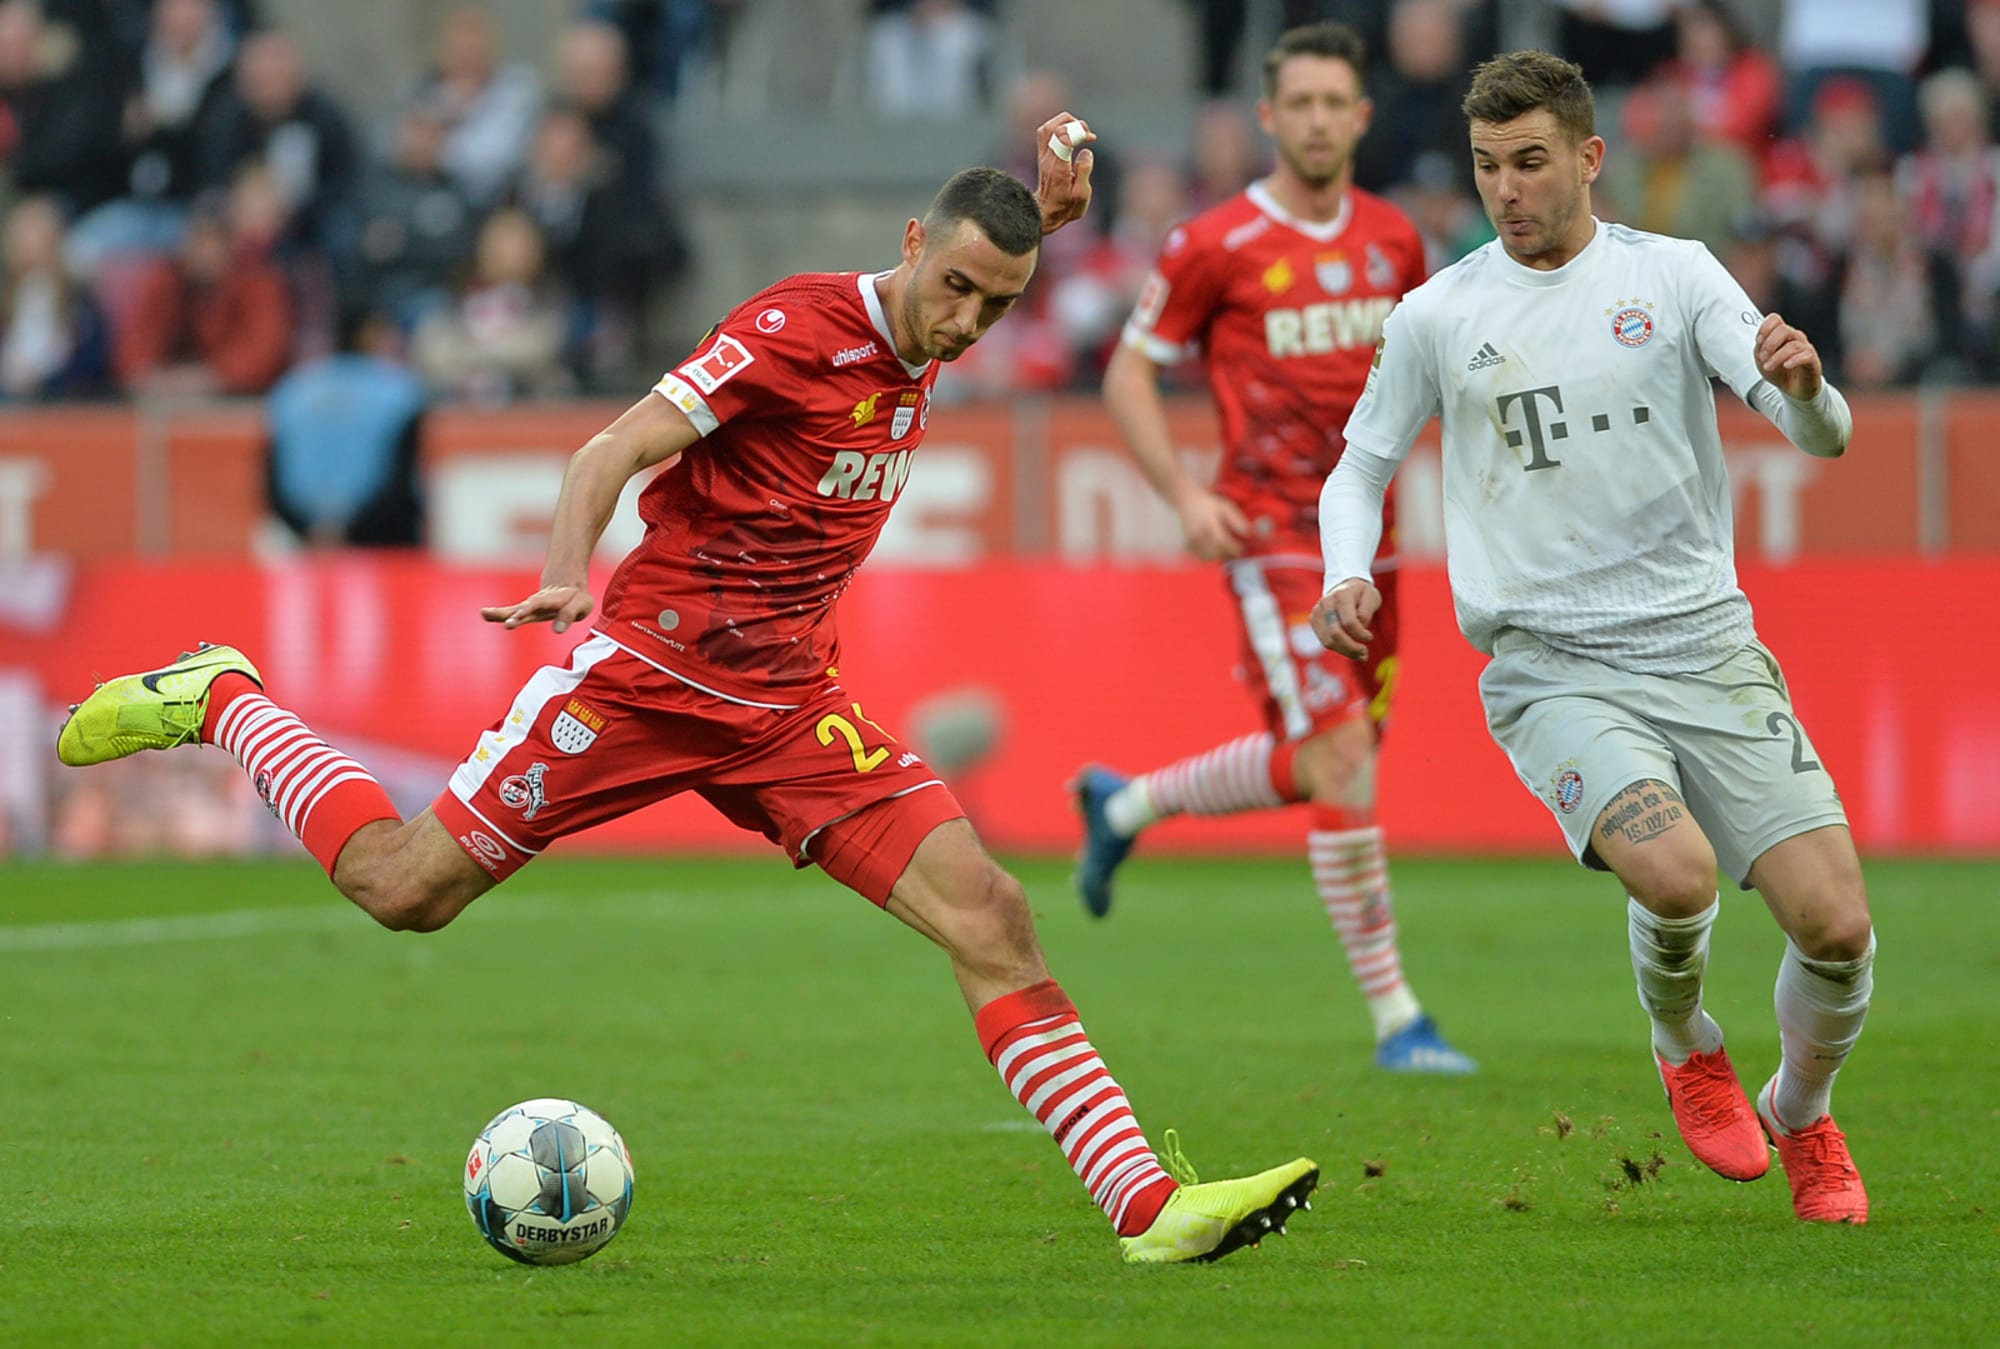 Match Preview: Bayern Munich play away against FC Koln in Bundesliga